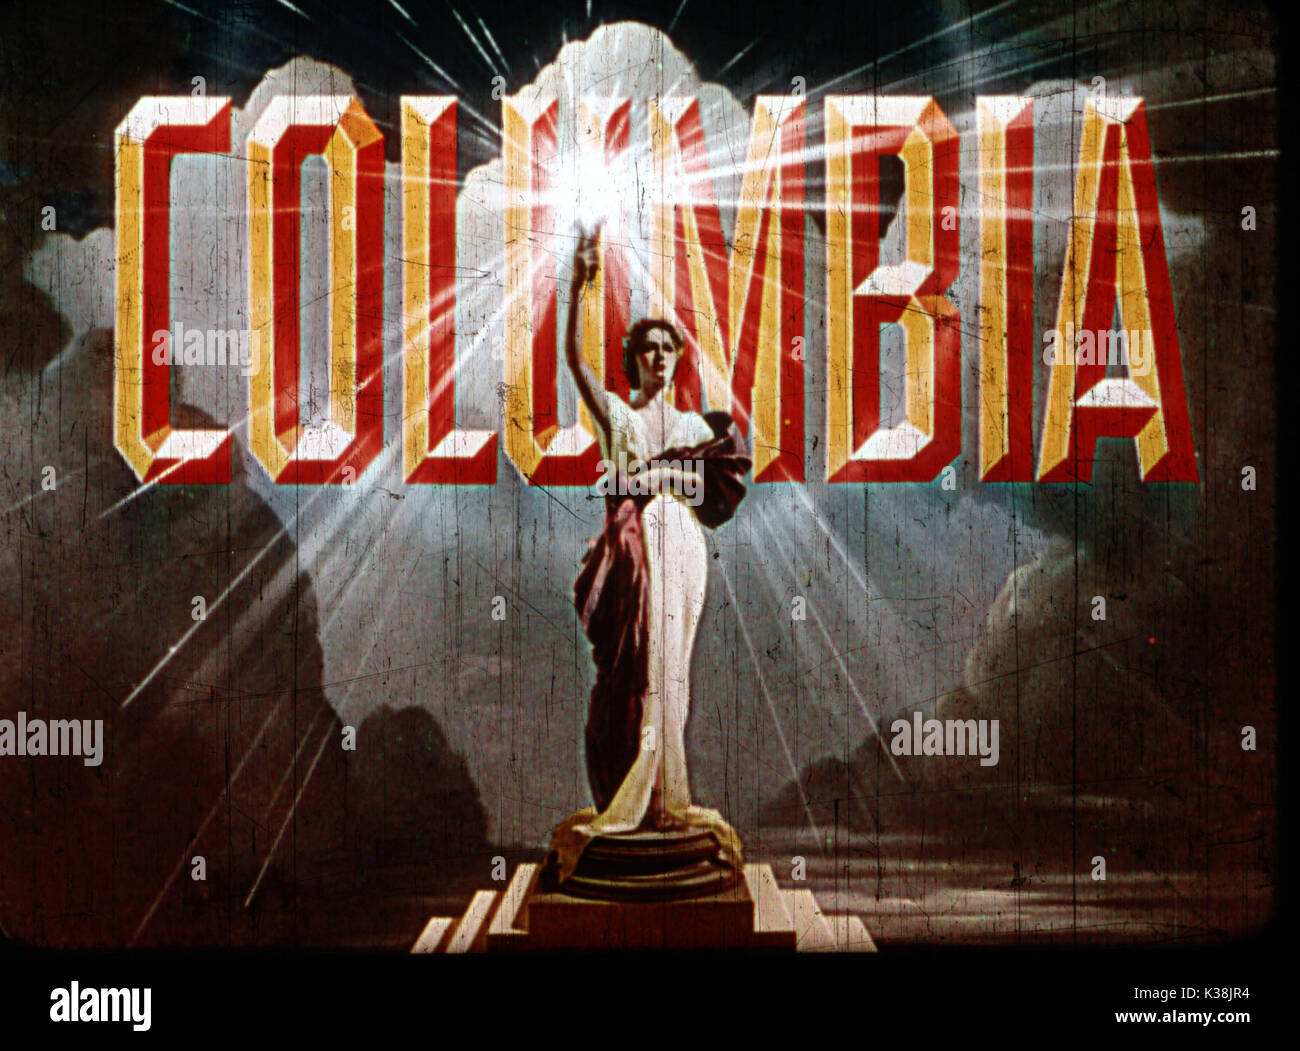 COLUMBIA PICTURES LOGO Stockfoto